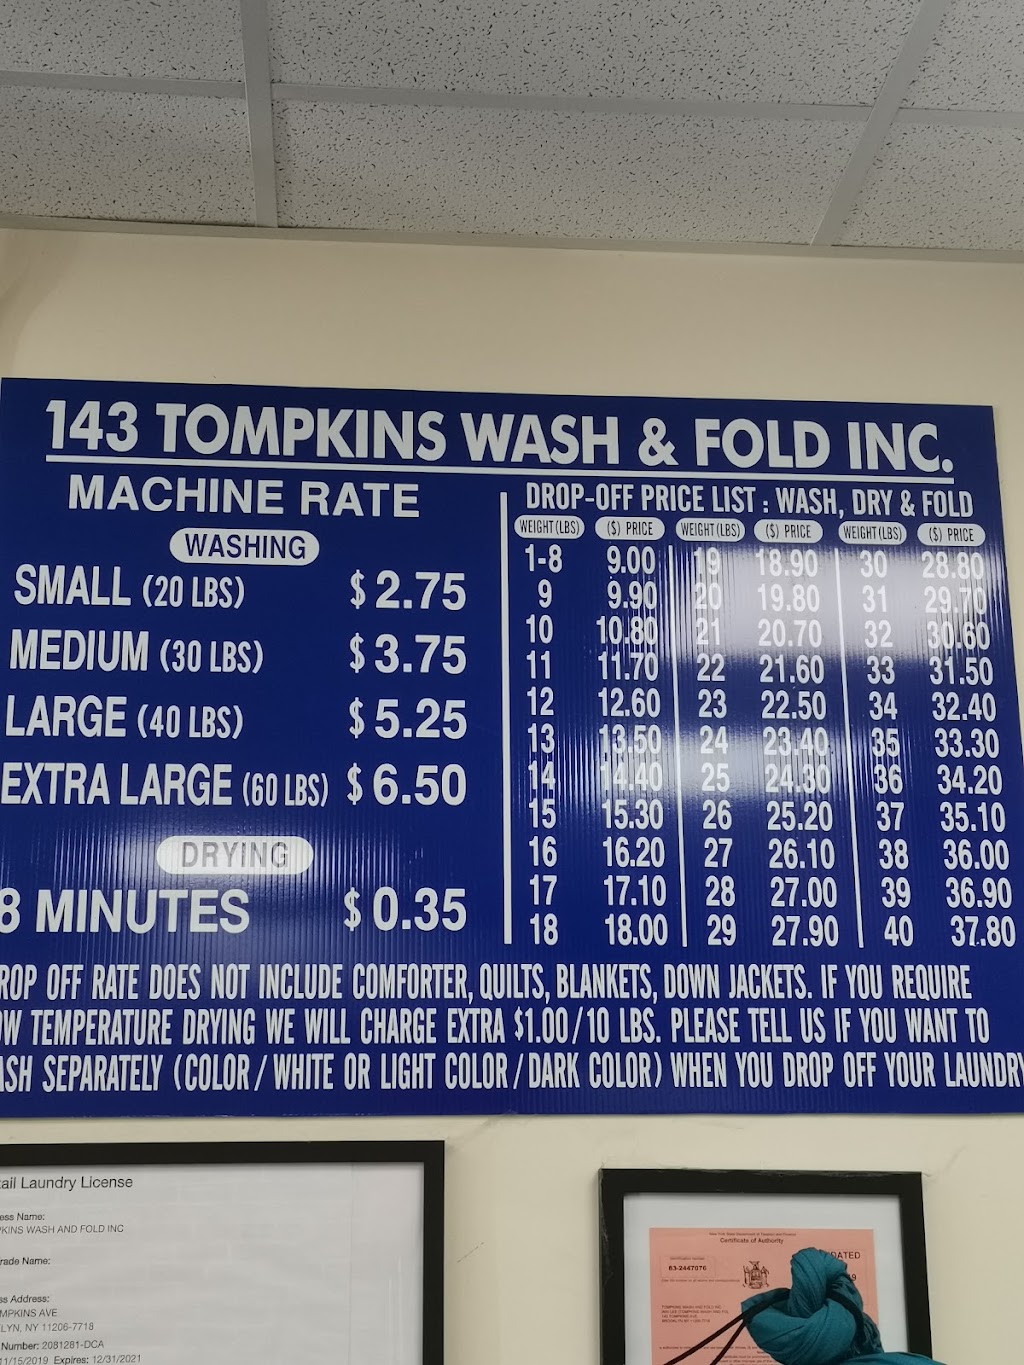 Tompkins Wash and Fold Inc | 143 Tompkins Ave, Brooklyn, NY 11206 | Phone: (917) 589-0149